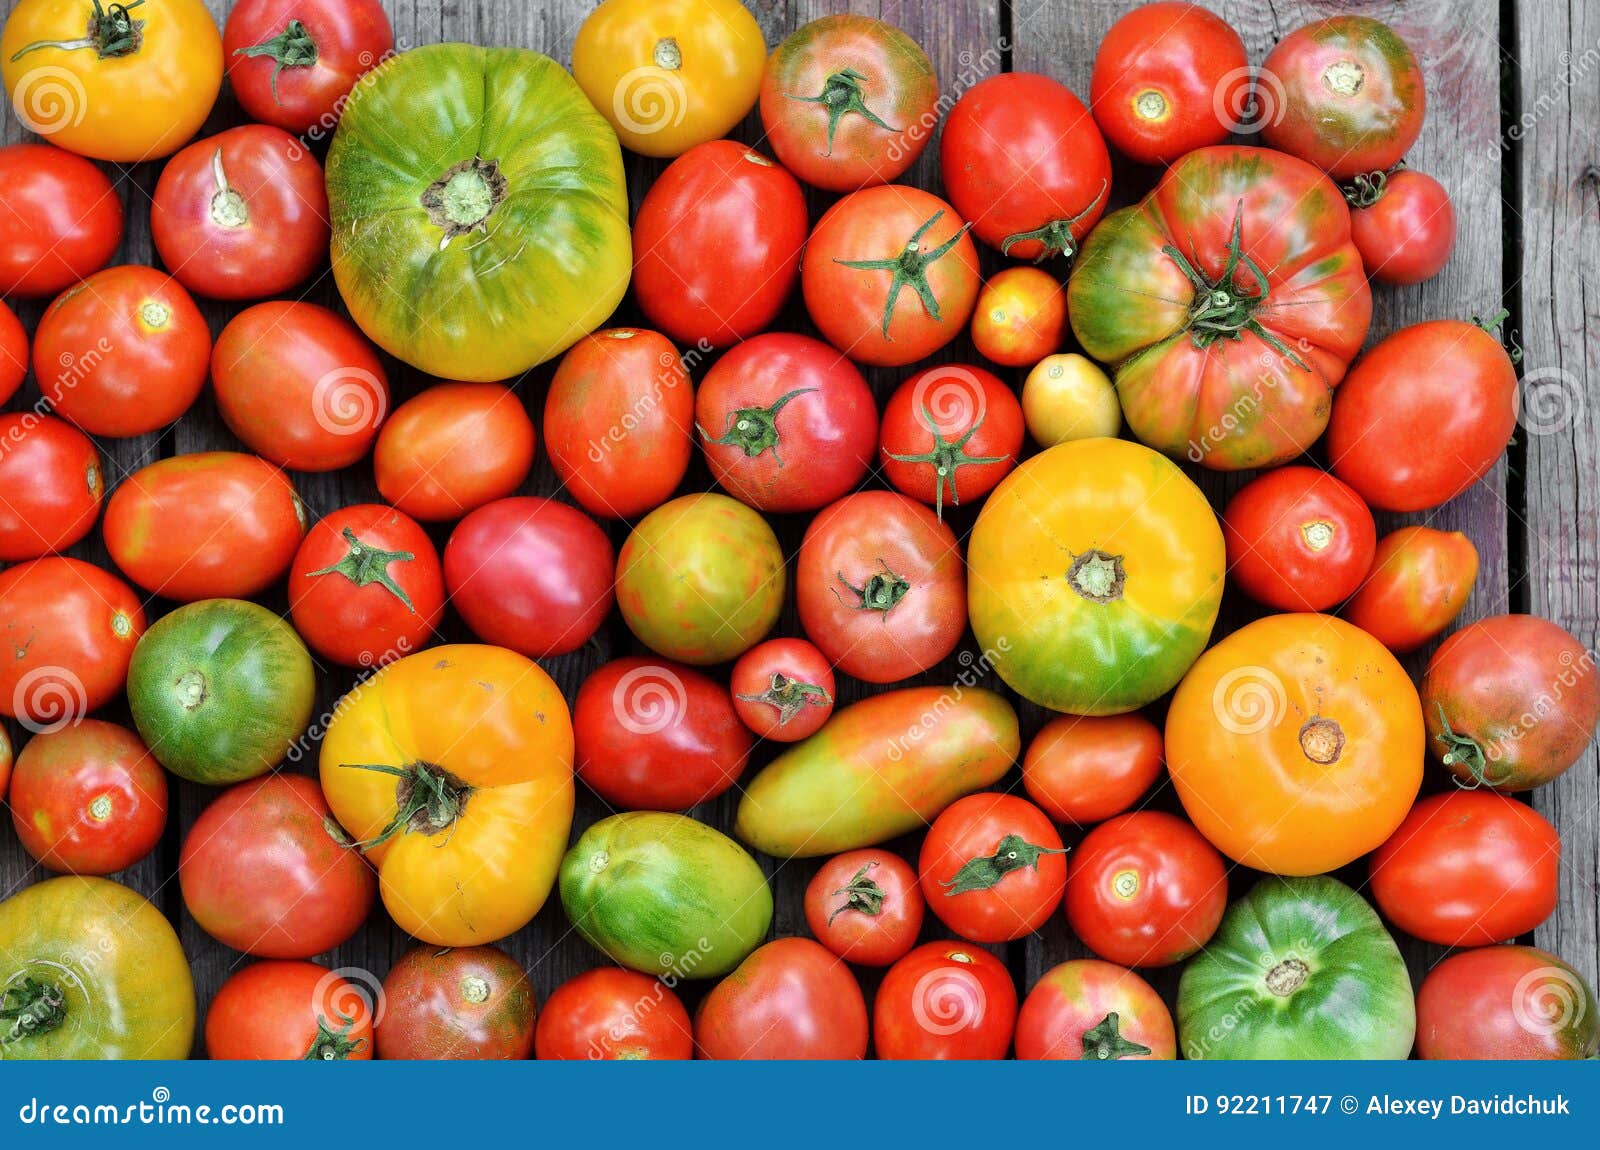 different maturity degree fresh farm tomatoes